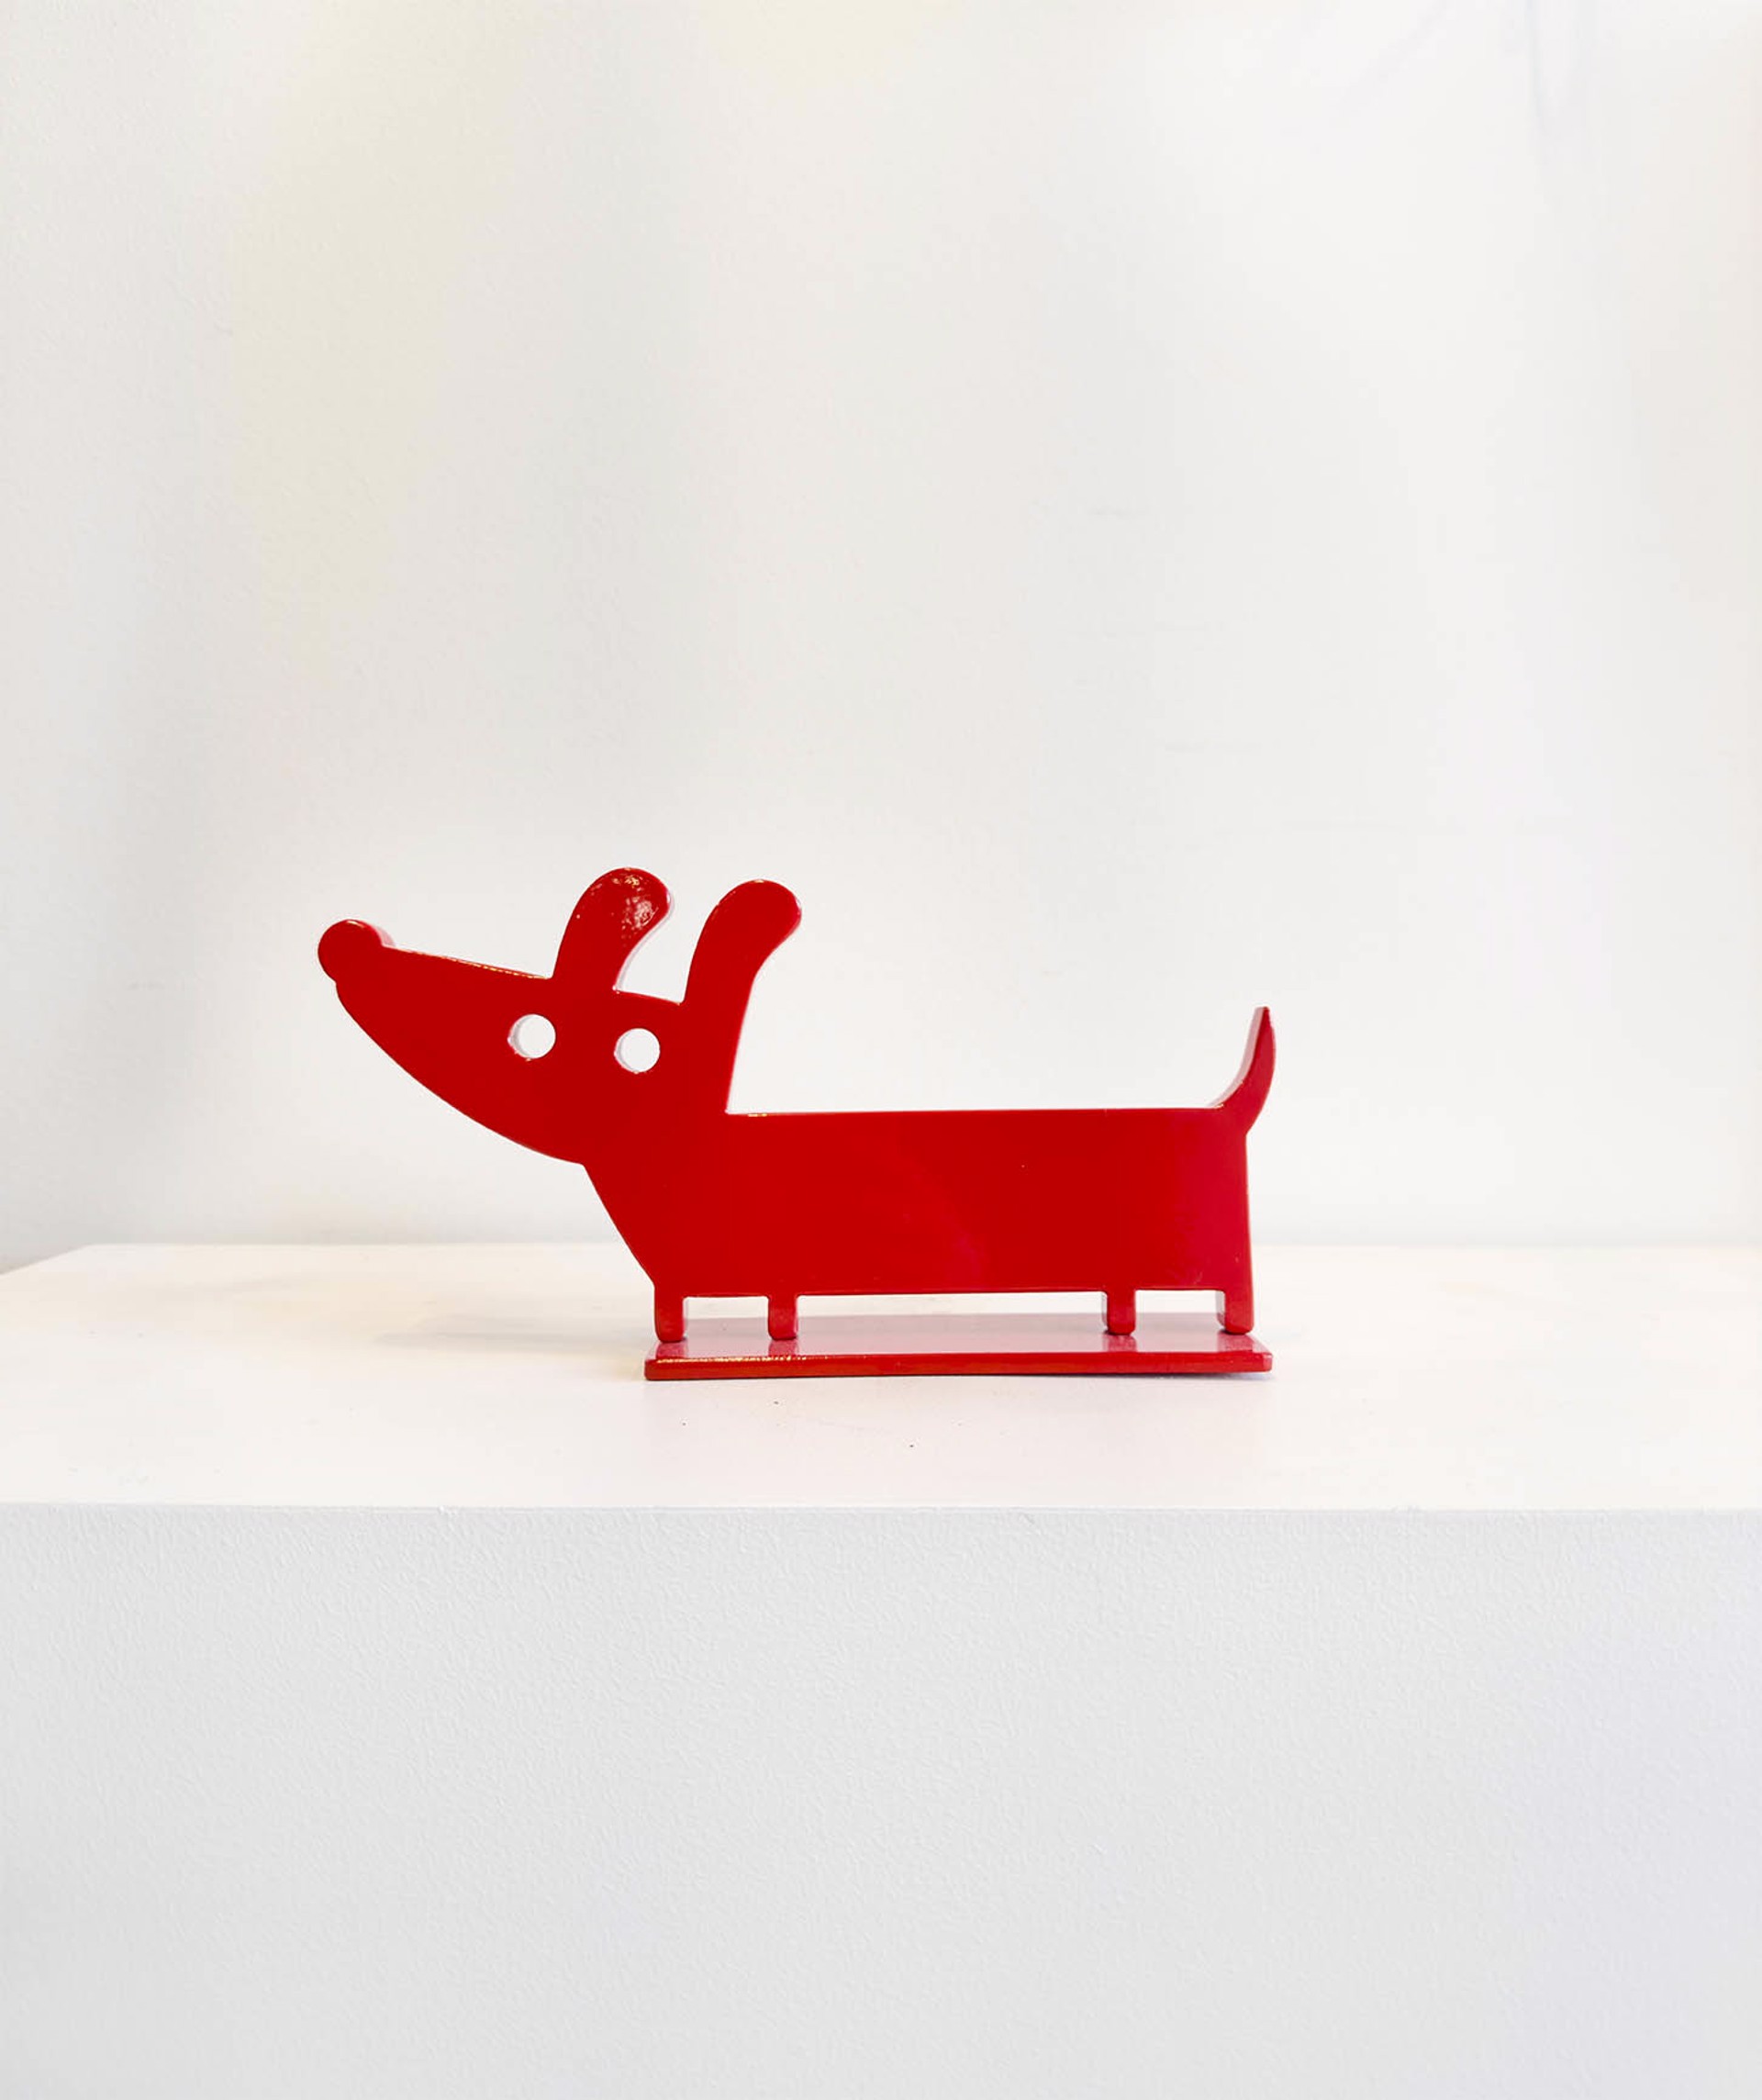 Miniature Aluminum Sculpture By Jeffie Brewer Featuring A Weiner Dog In Red Finish